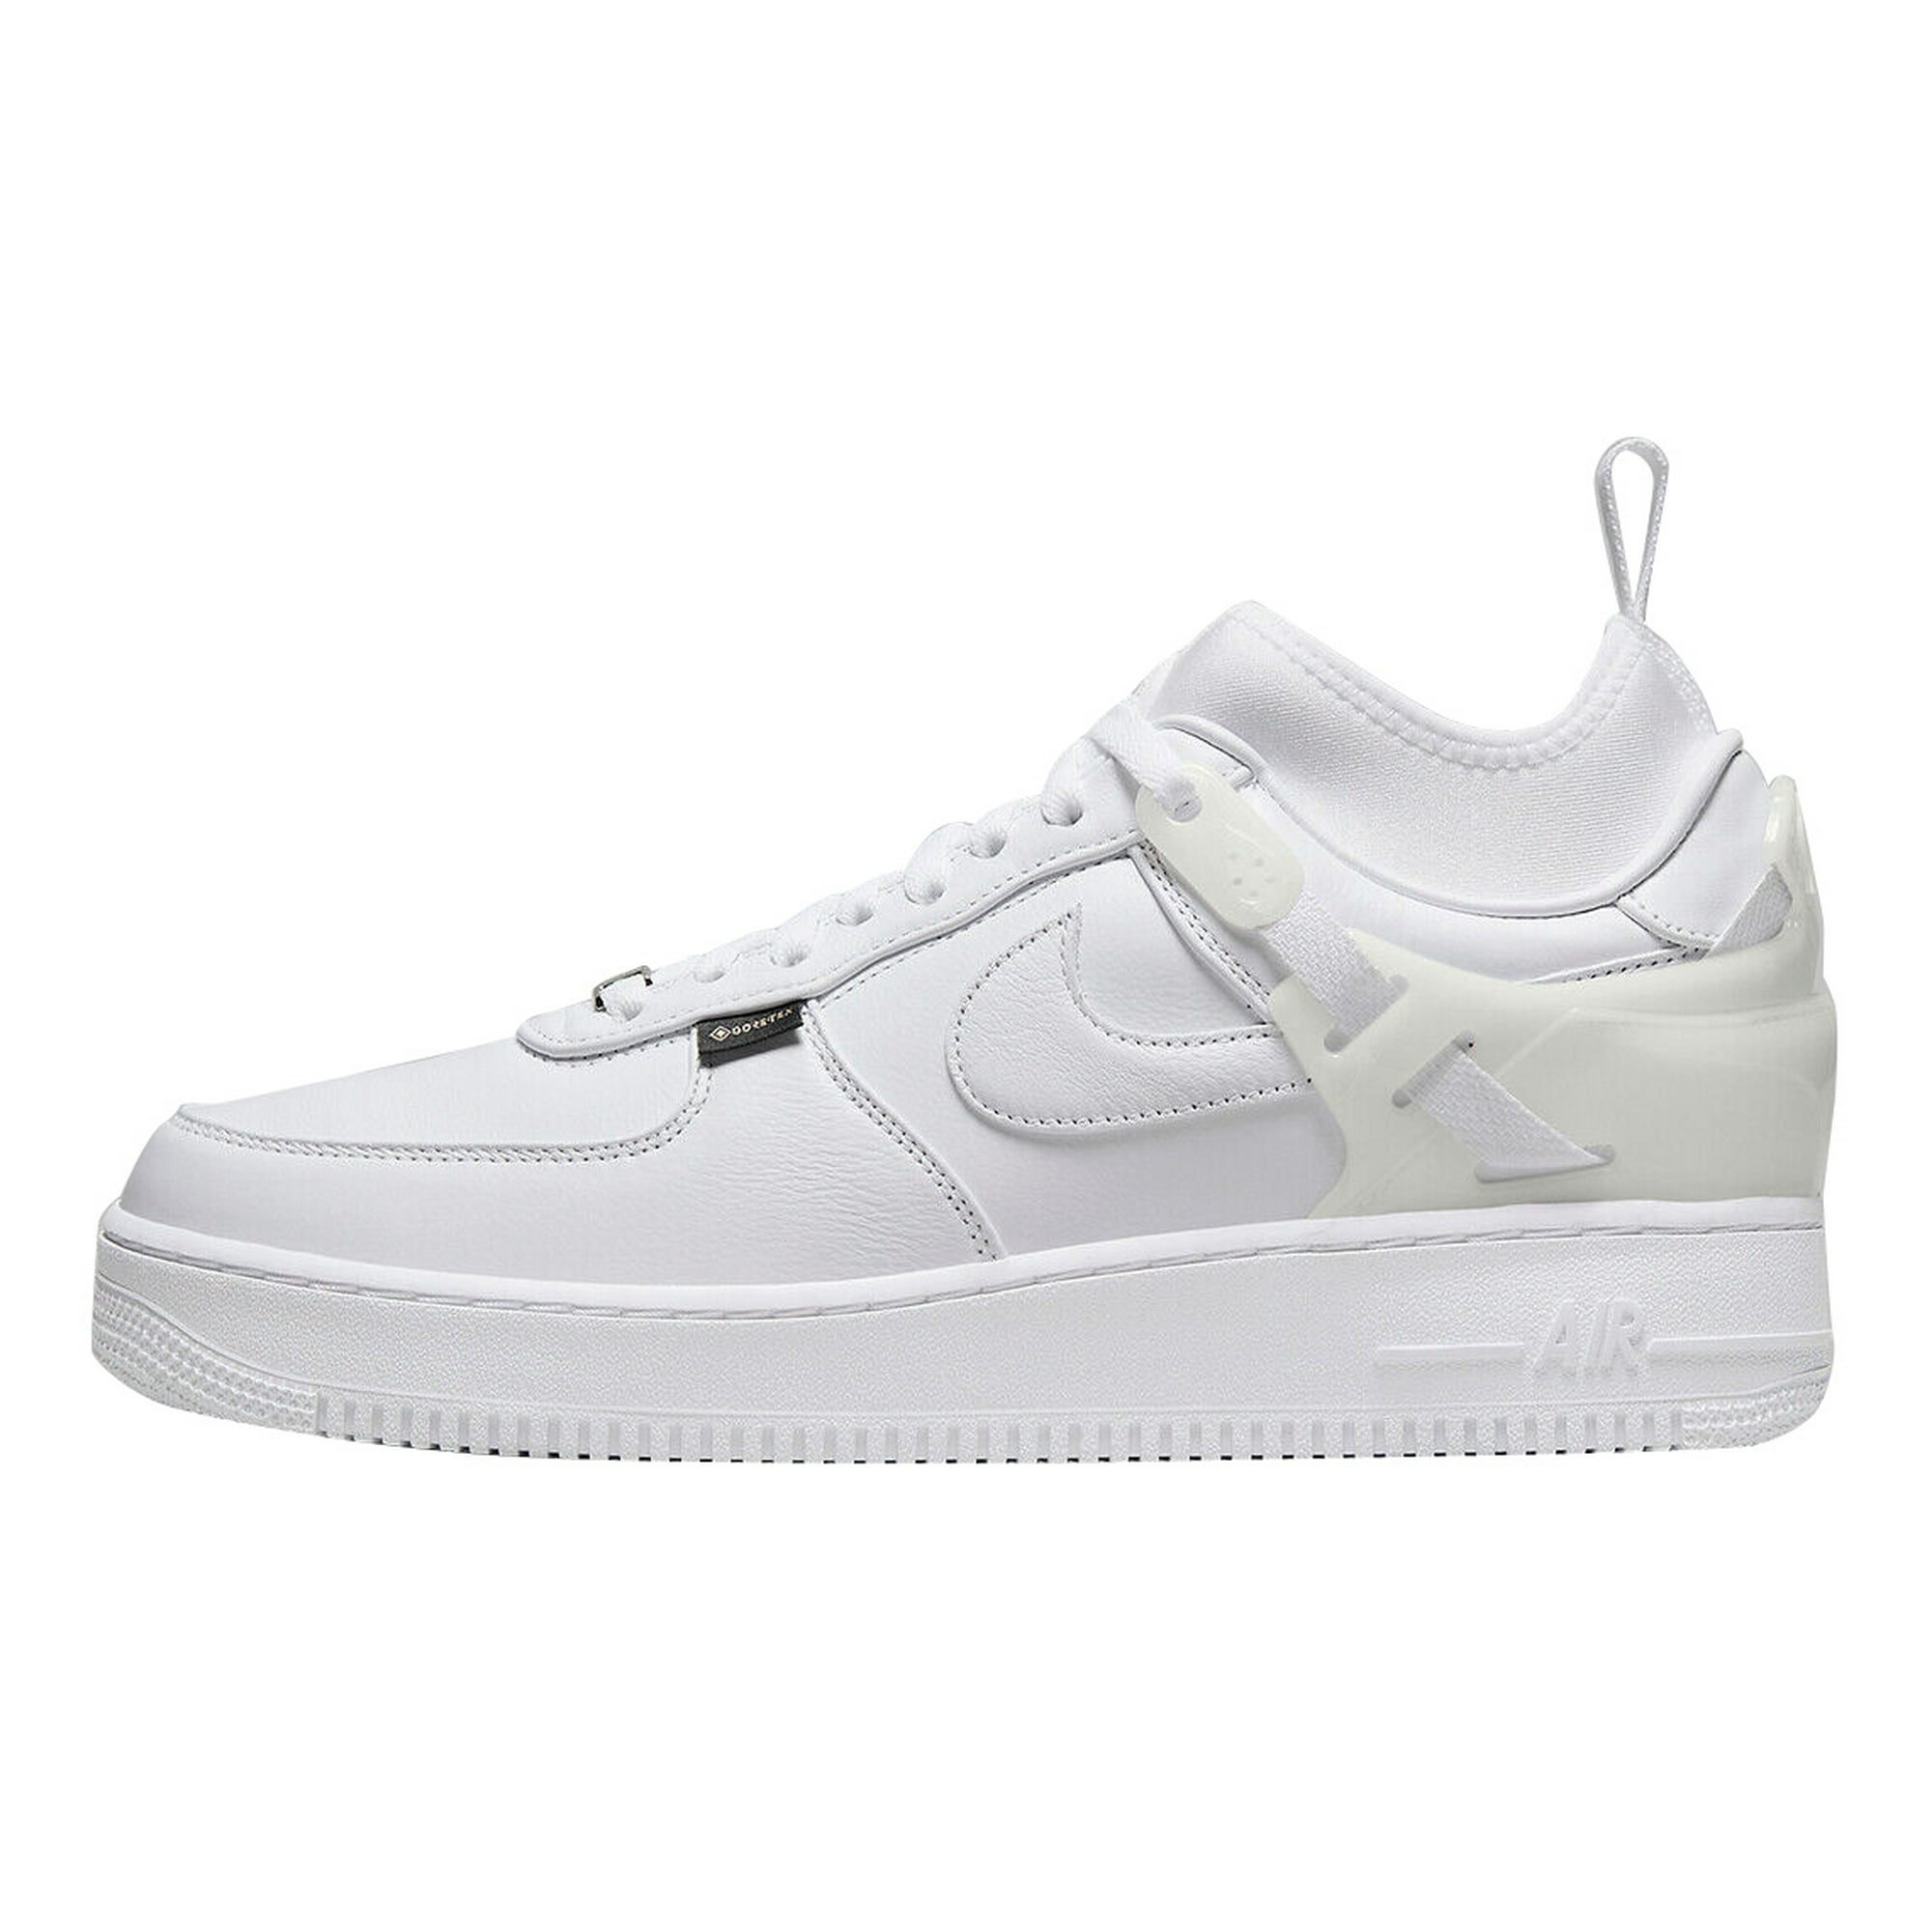 Men's shoes Nike Air Force 1 '07 LV8 Utility White/ White-Black